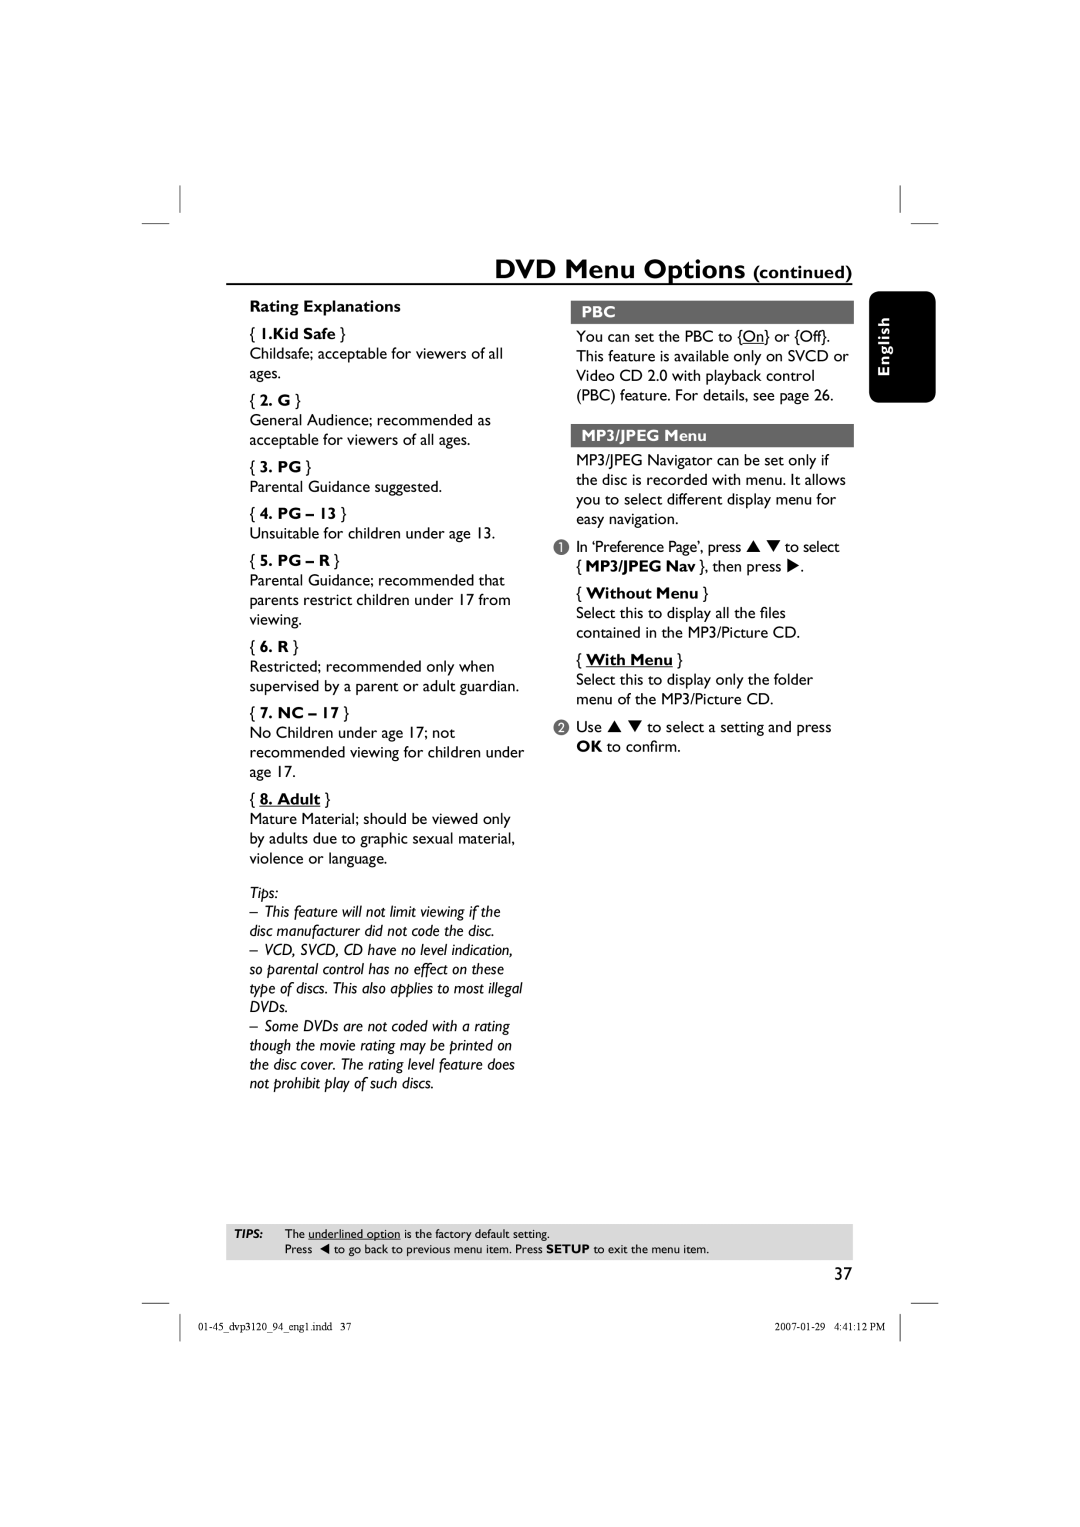 Philips DVP3721 Rating Explanations 1.Kid Safe, 2. G, 3. PG, 4. PG, Pg - R, 6. R, 7. NC, Adult, MP3/JPEG Menu, With Menu 